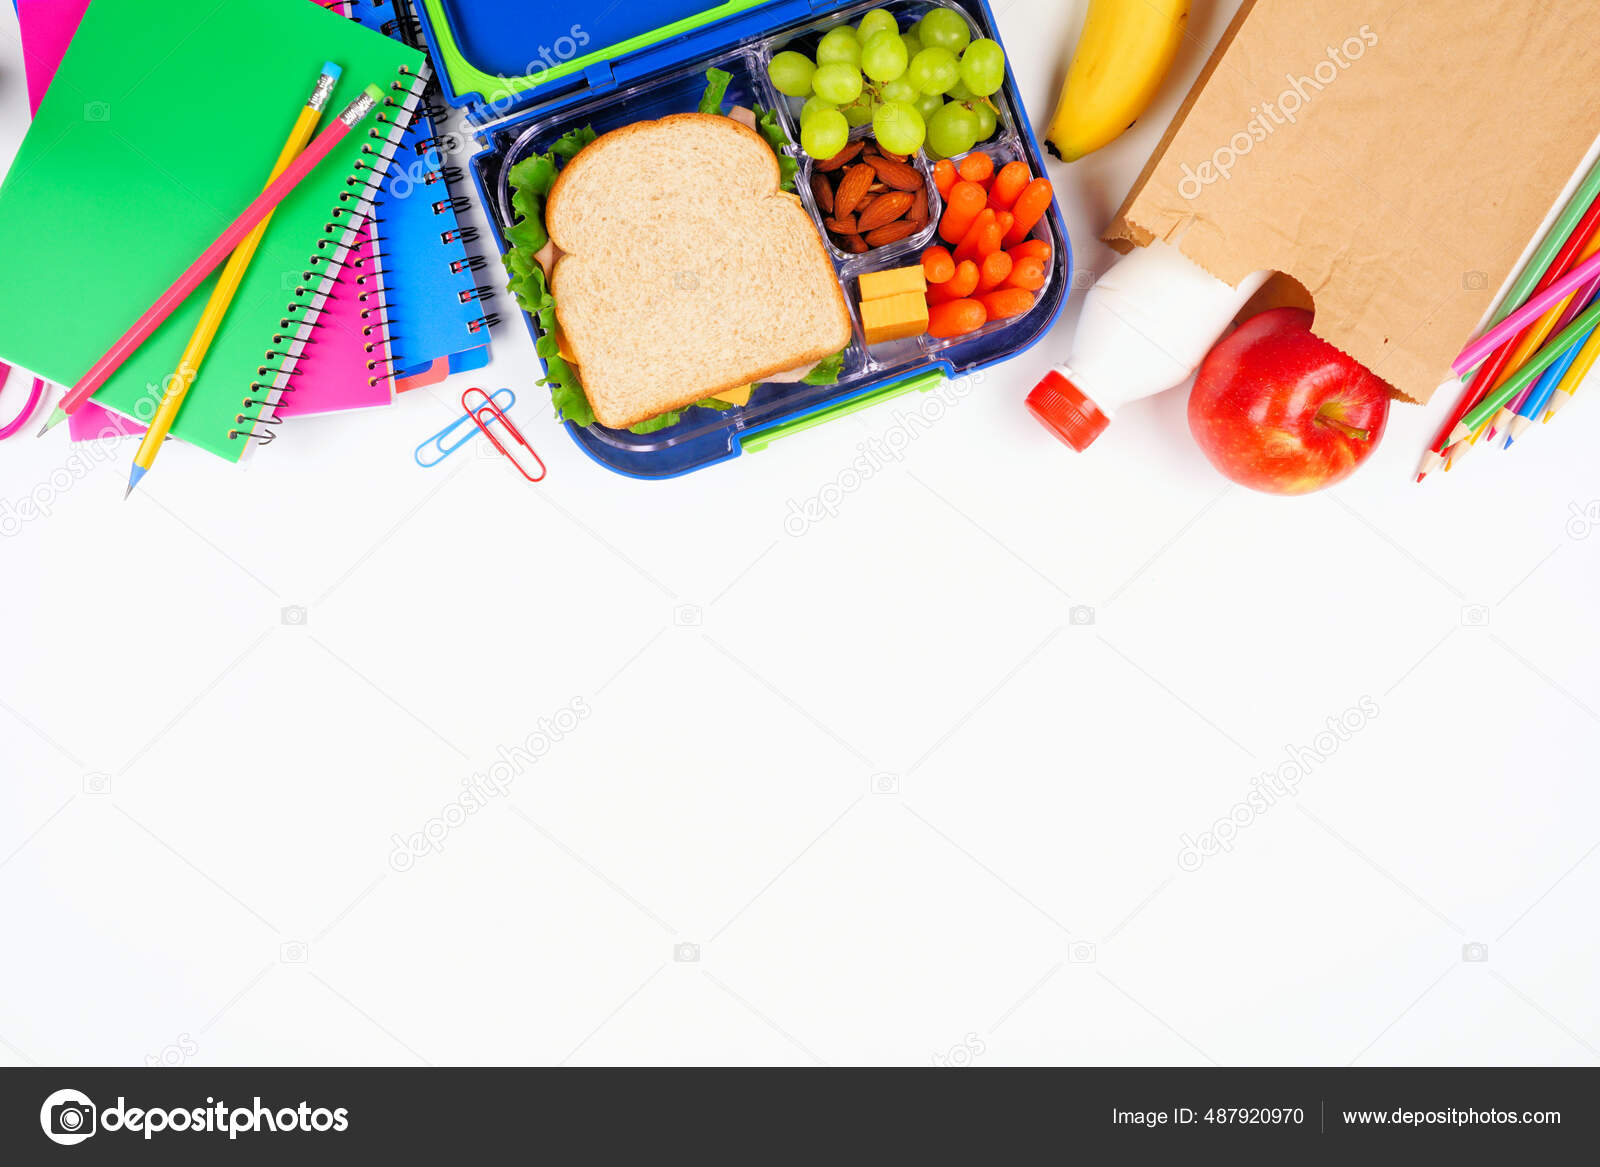 https://st2.depositphotos.com/12902820/48792/i/1600/depositphotos_487920970-stock-photo-healthy-school-lunch-school-supplies.jpg